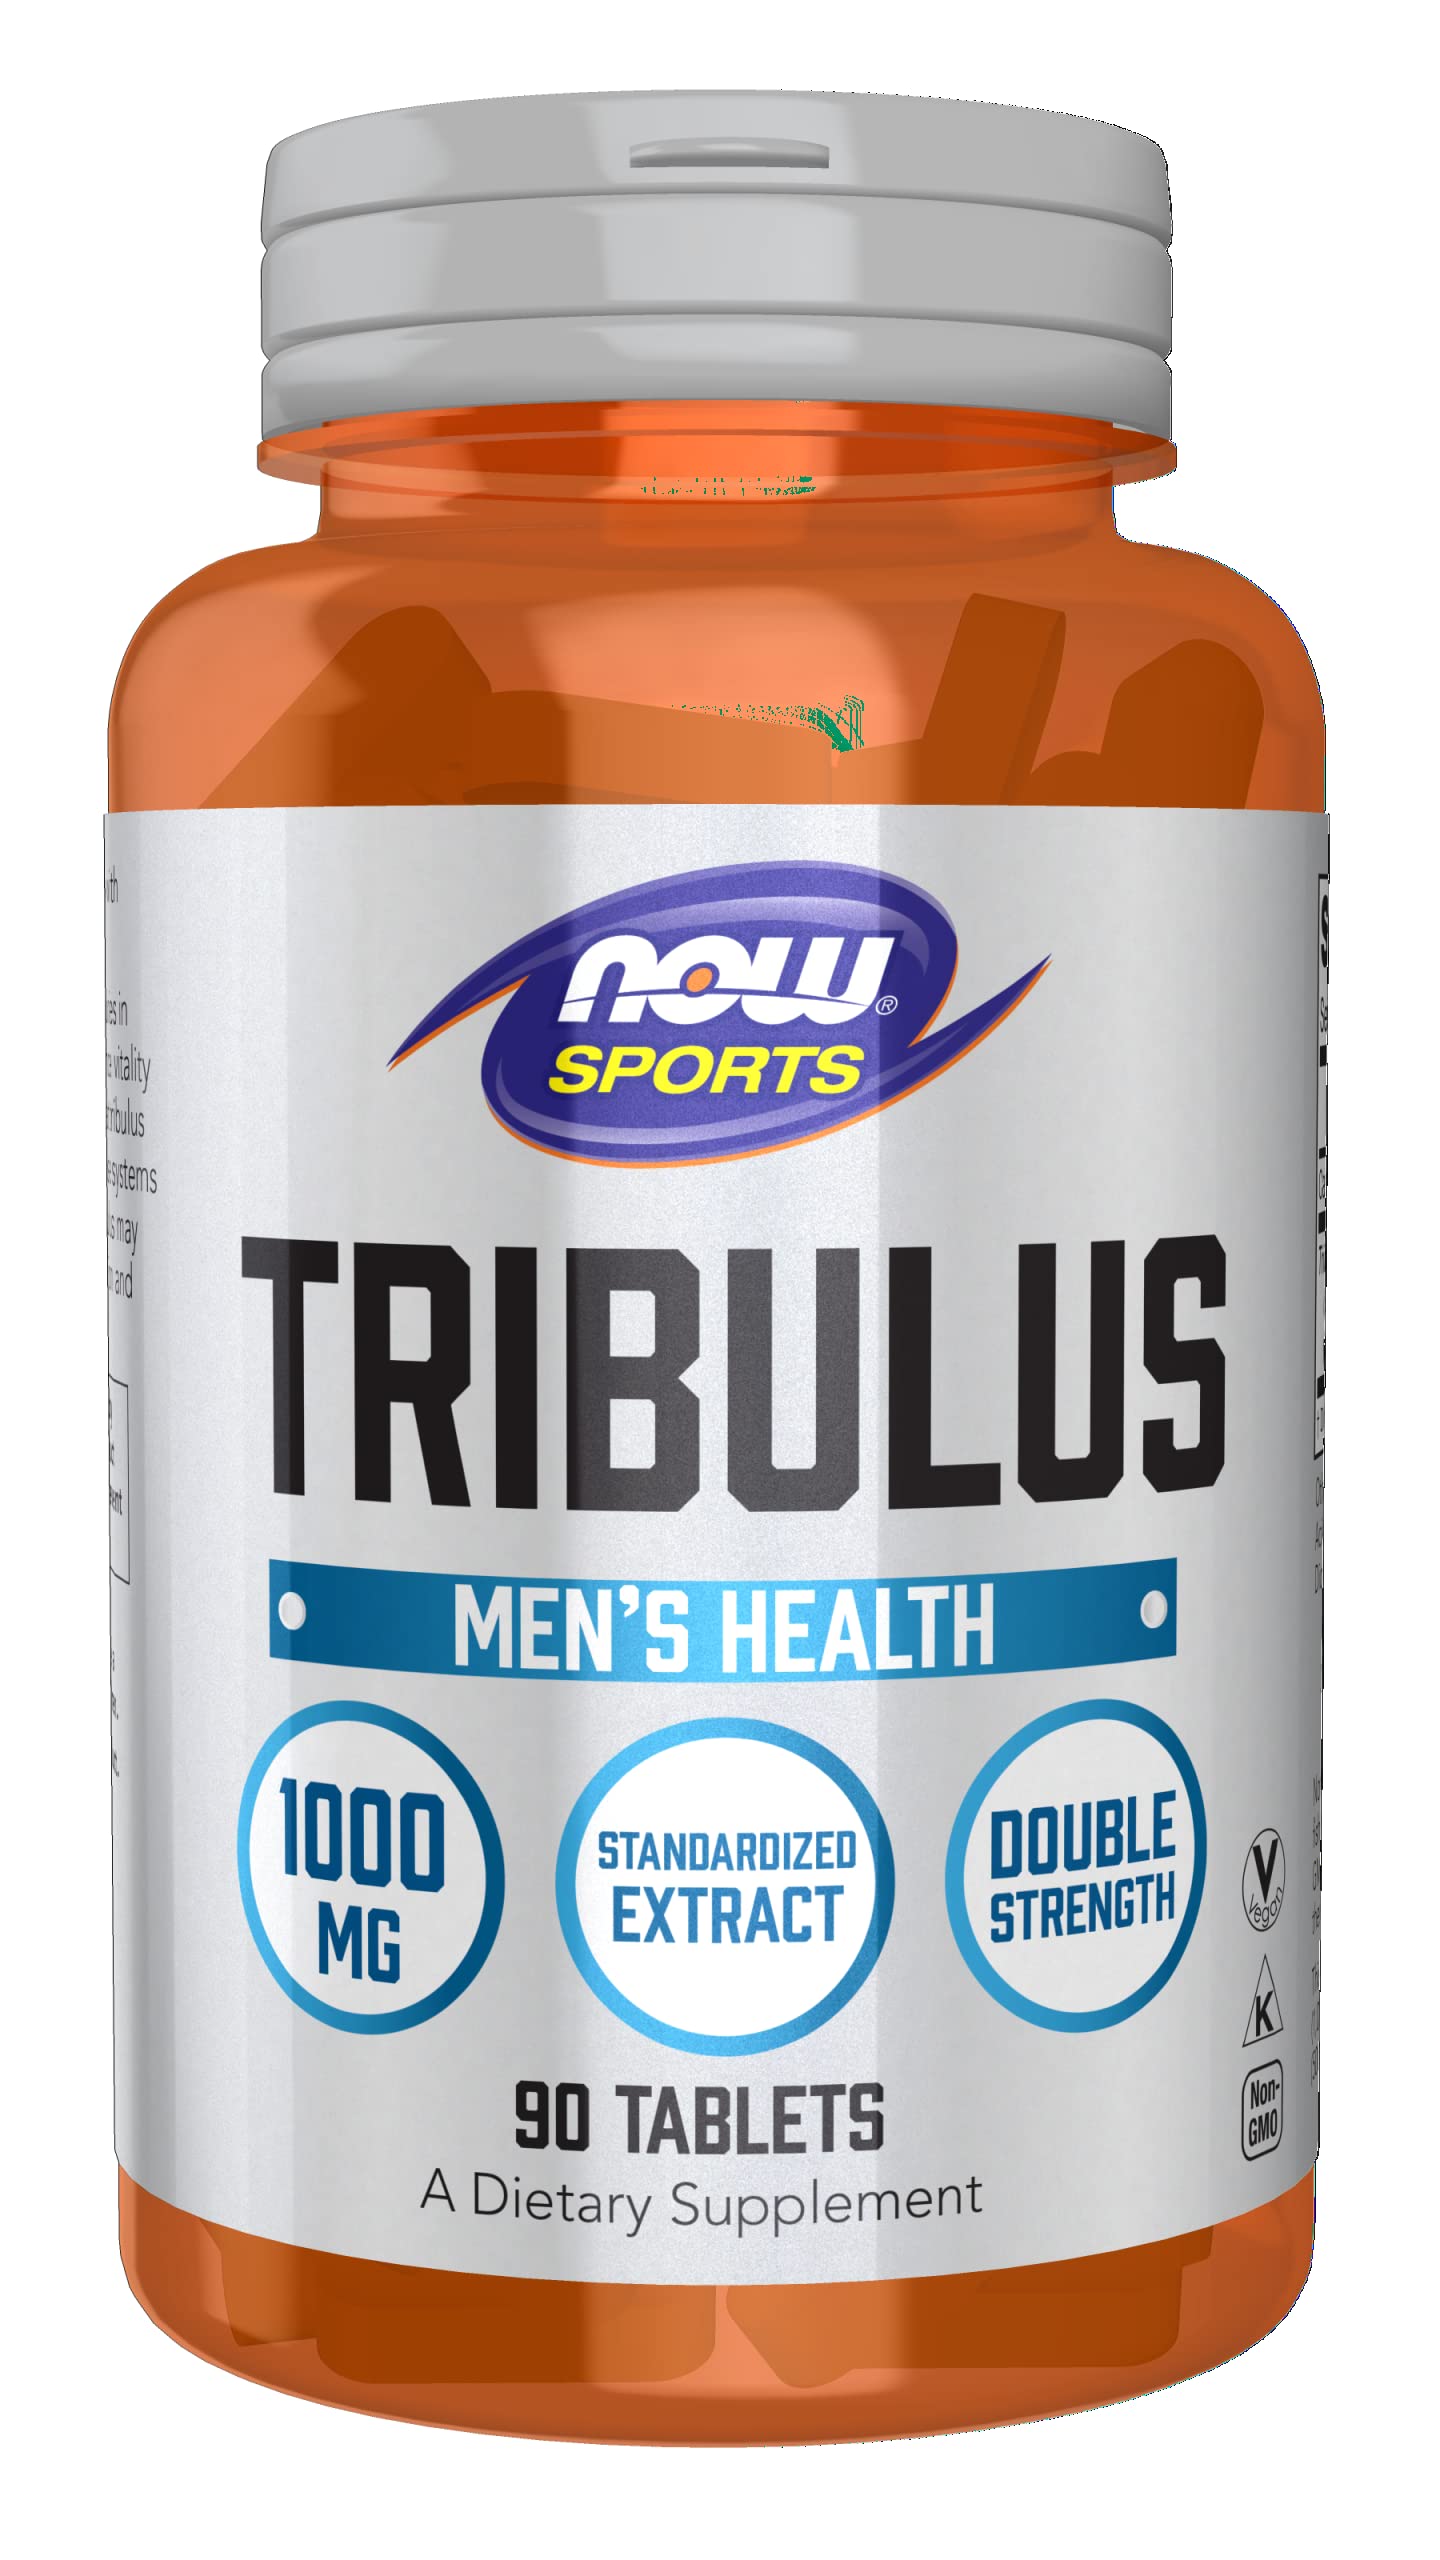 Book Cover NOW Sports Nutrition, Tribulus (Tribulus terrestris) 1,000 mg, Double Strength, Men's Health, 90 Tablets